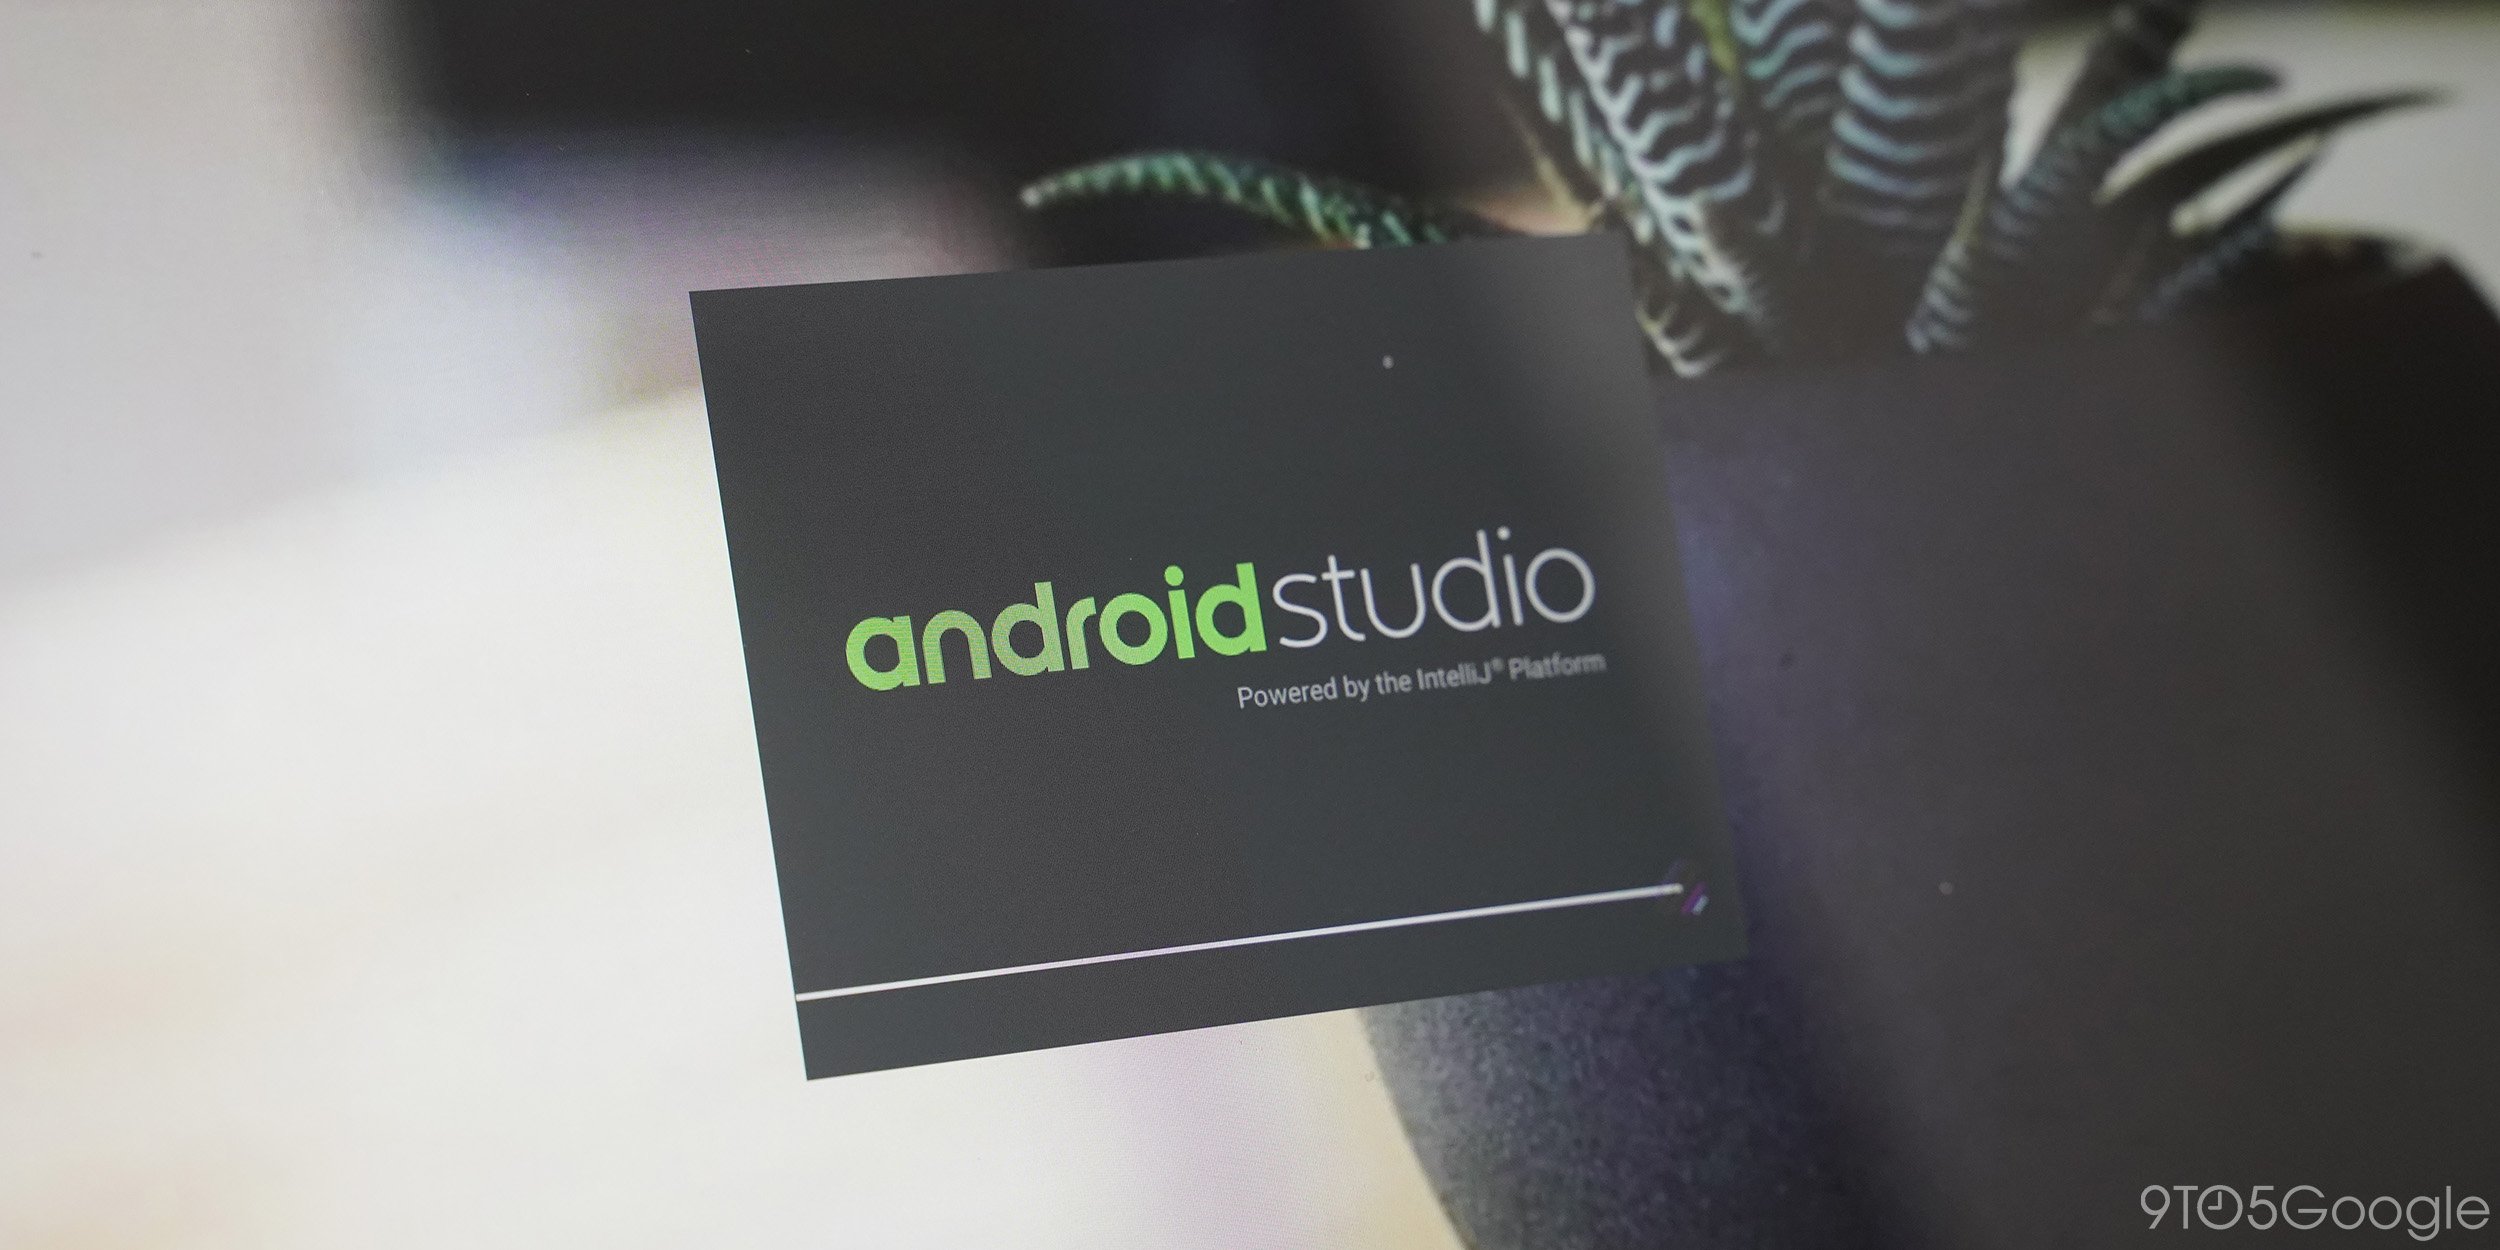 android studio download 32 bit windows 7